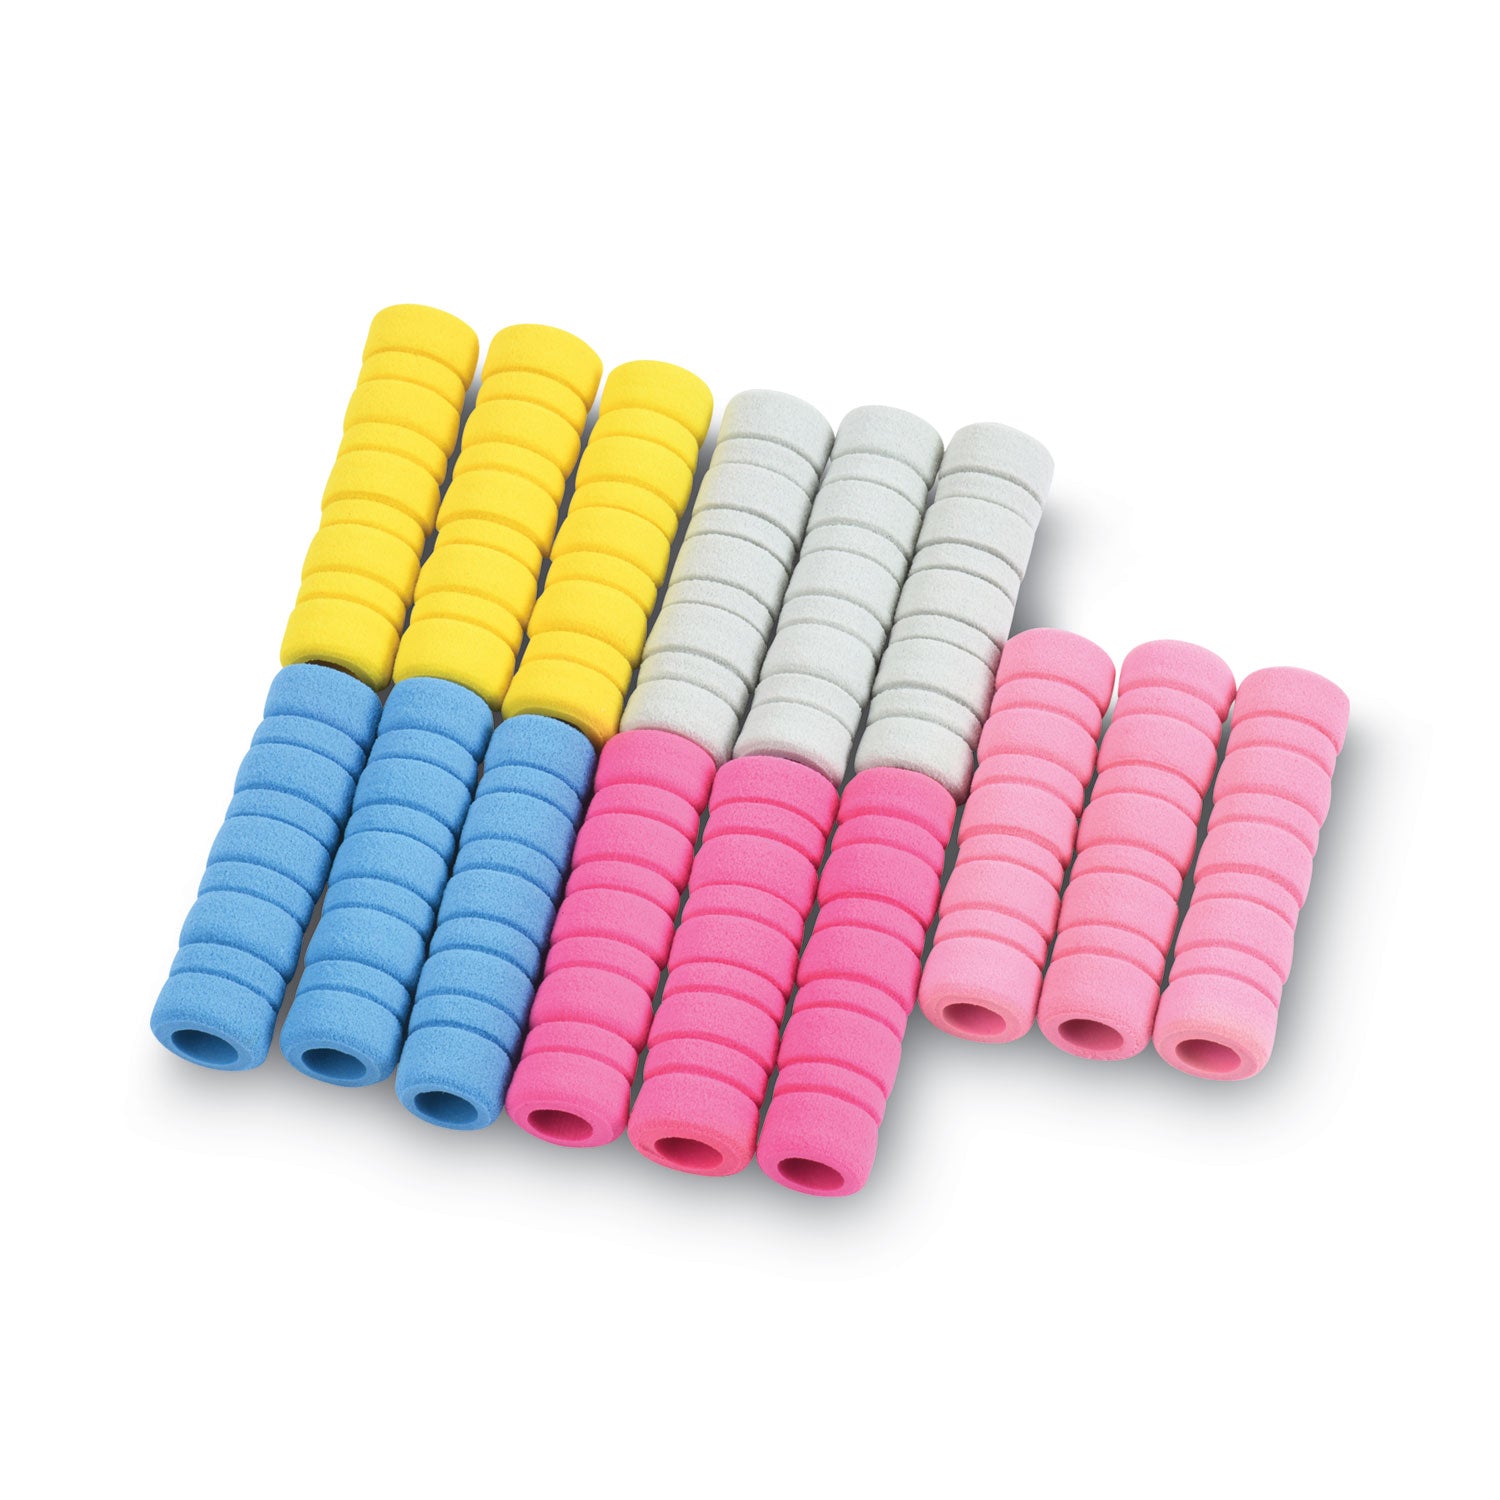 Ribbed Pencil Cushions, 1.75" Long, Assorted Colors, 50/Box - 